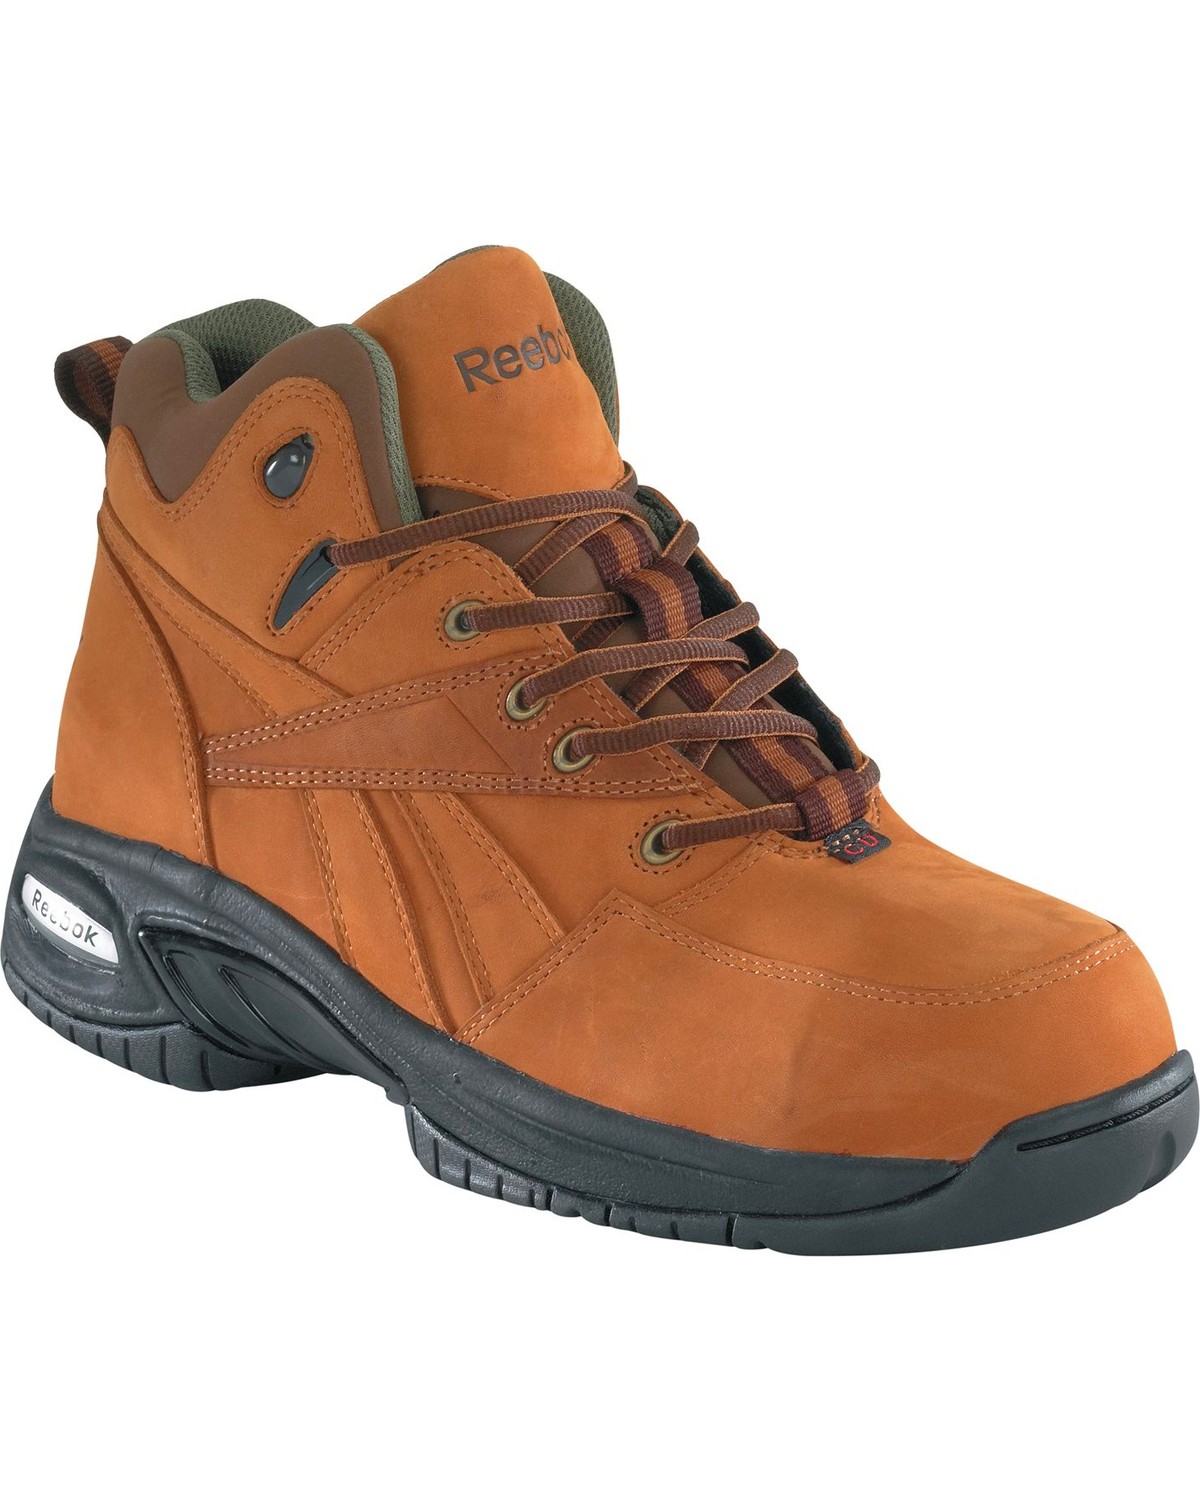 Reebok Women's Tyak Hiking Work Boots - Composite Toe